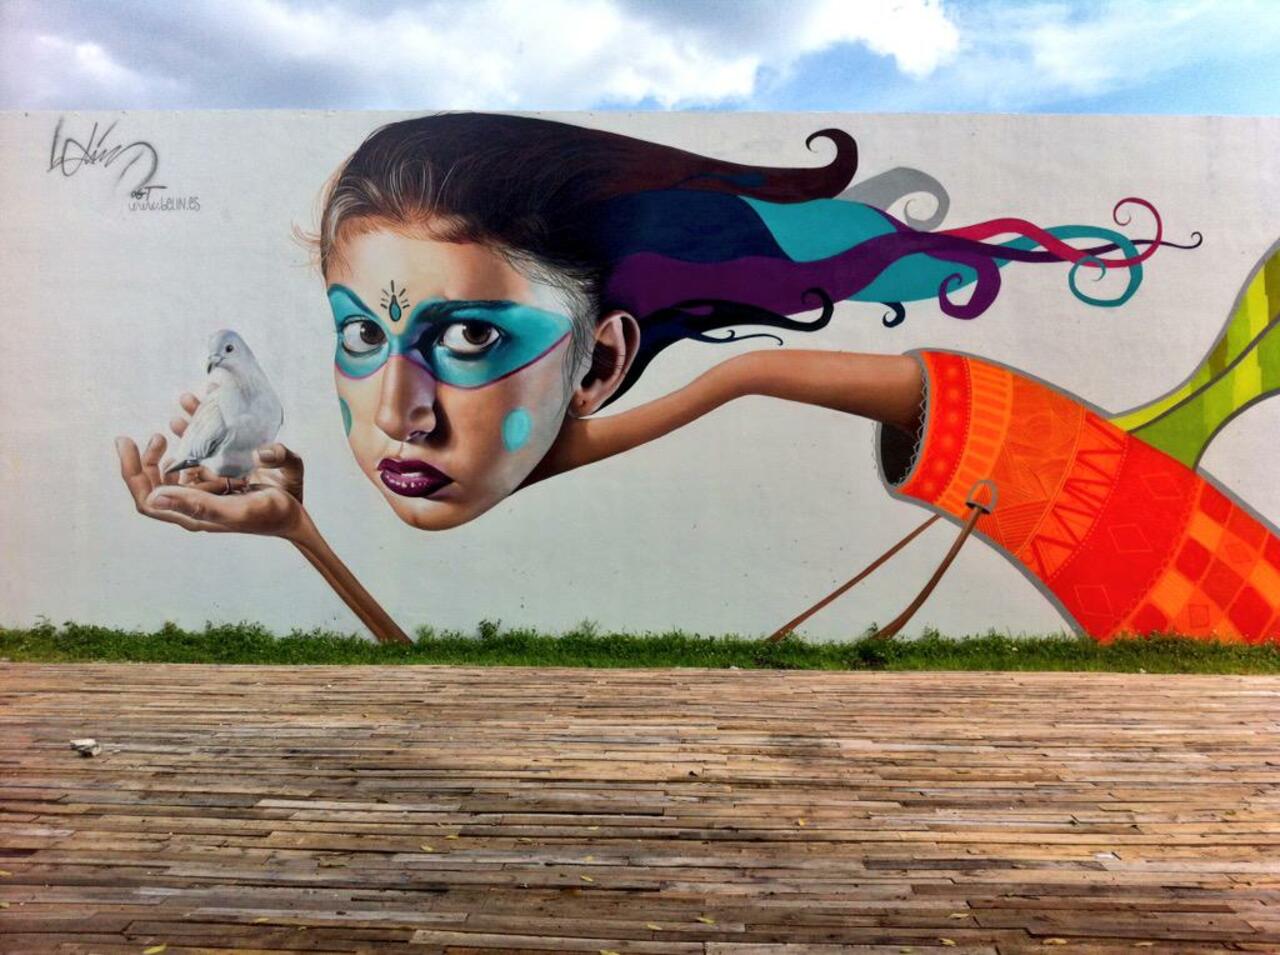 Belin 
Miami
#streetart #art #graffiti #mural http://t.co/WnptwydOf9